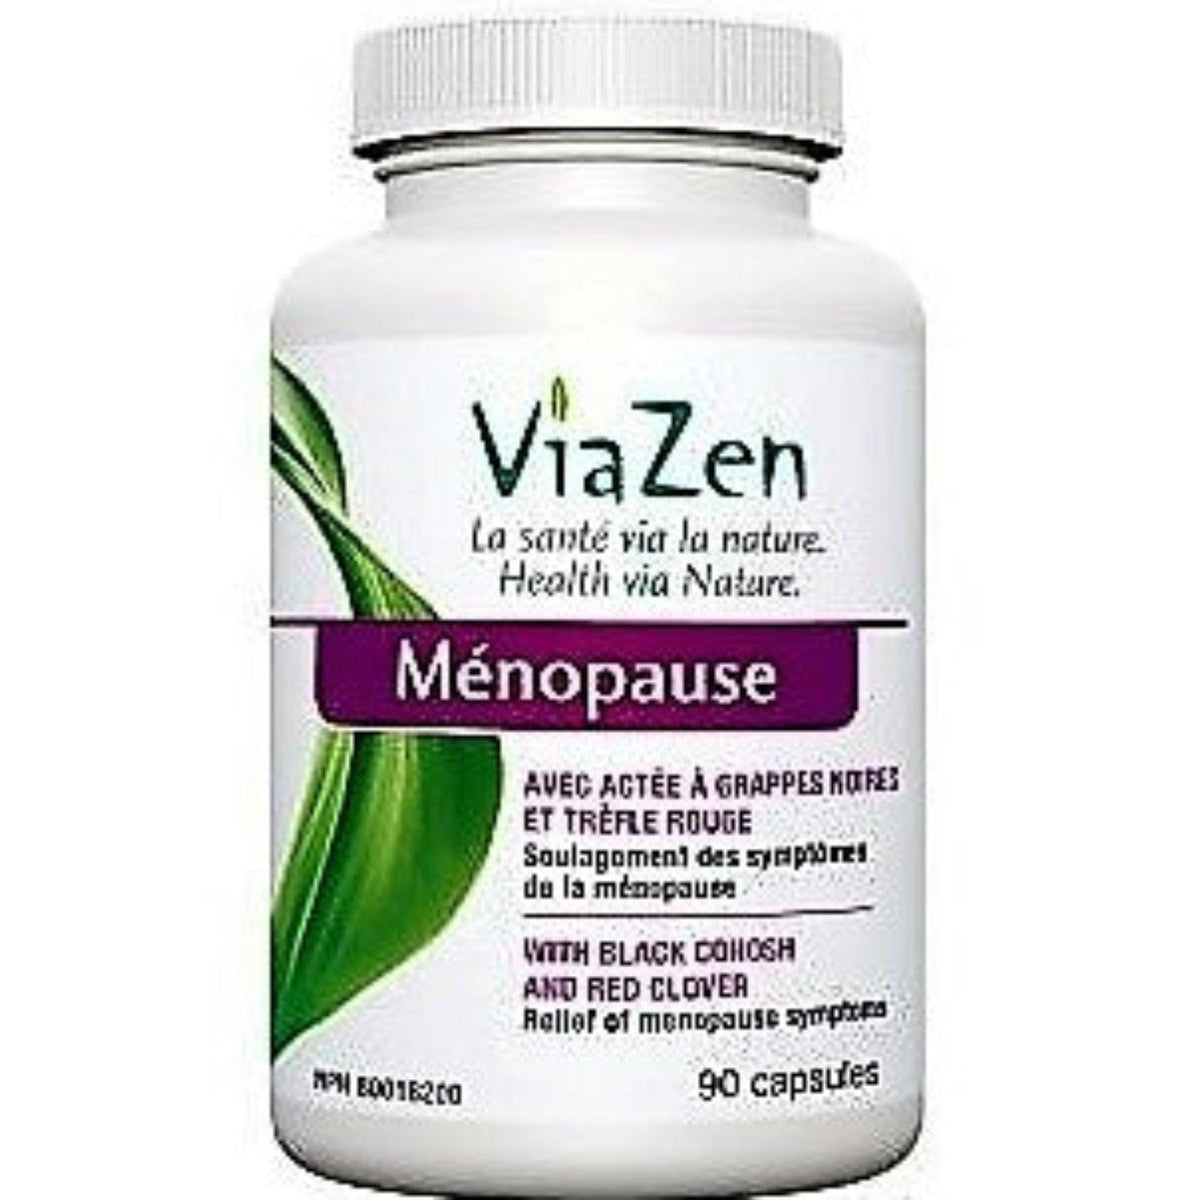 ViaZen Menopause 90 capsules Supplements - Hormonal Balance at Village Vitamin Store